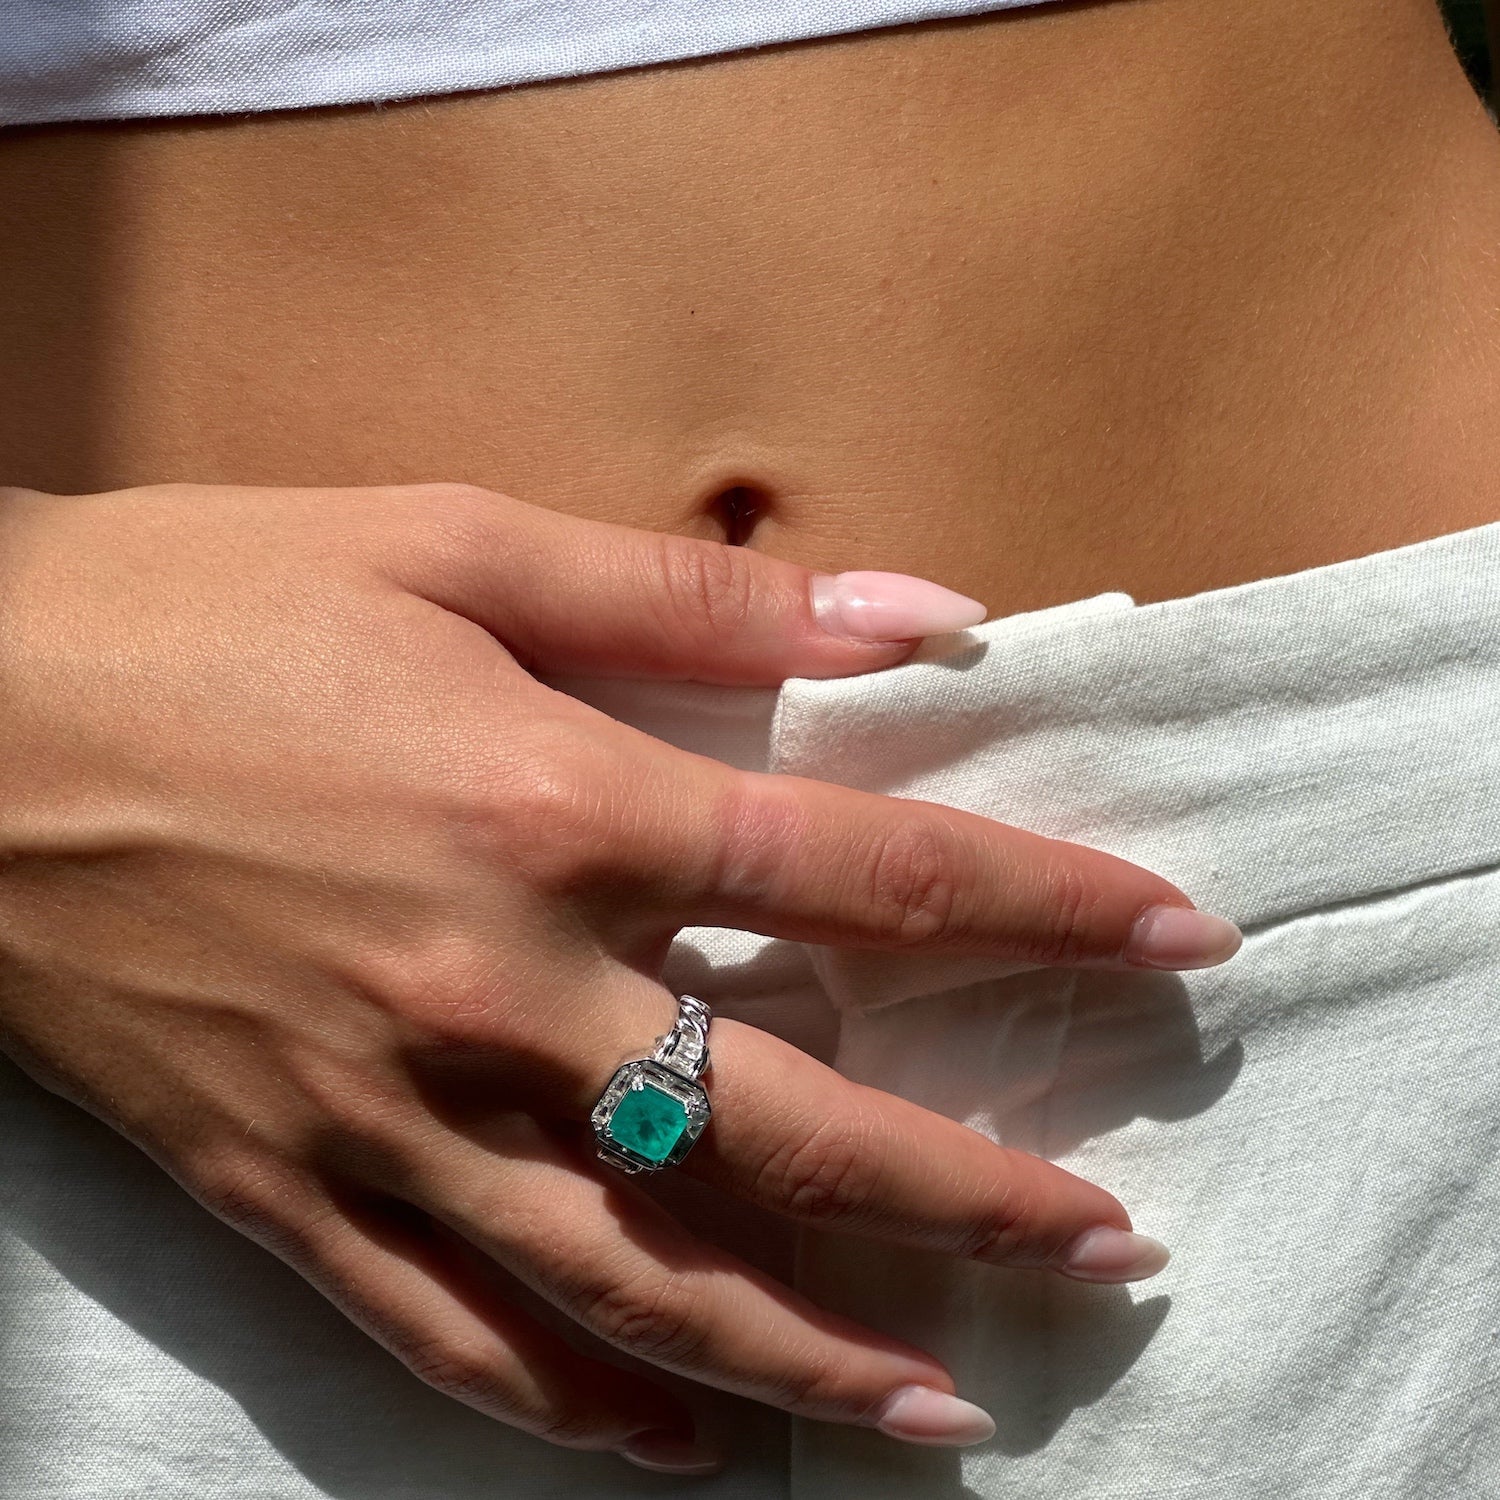 Captivating Paraiba Tourmaline Ring on Model&#39;s Hand - Unparalleled Beauty